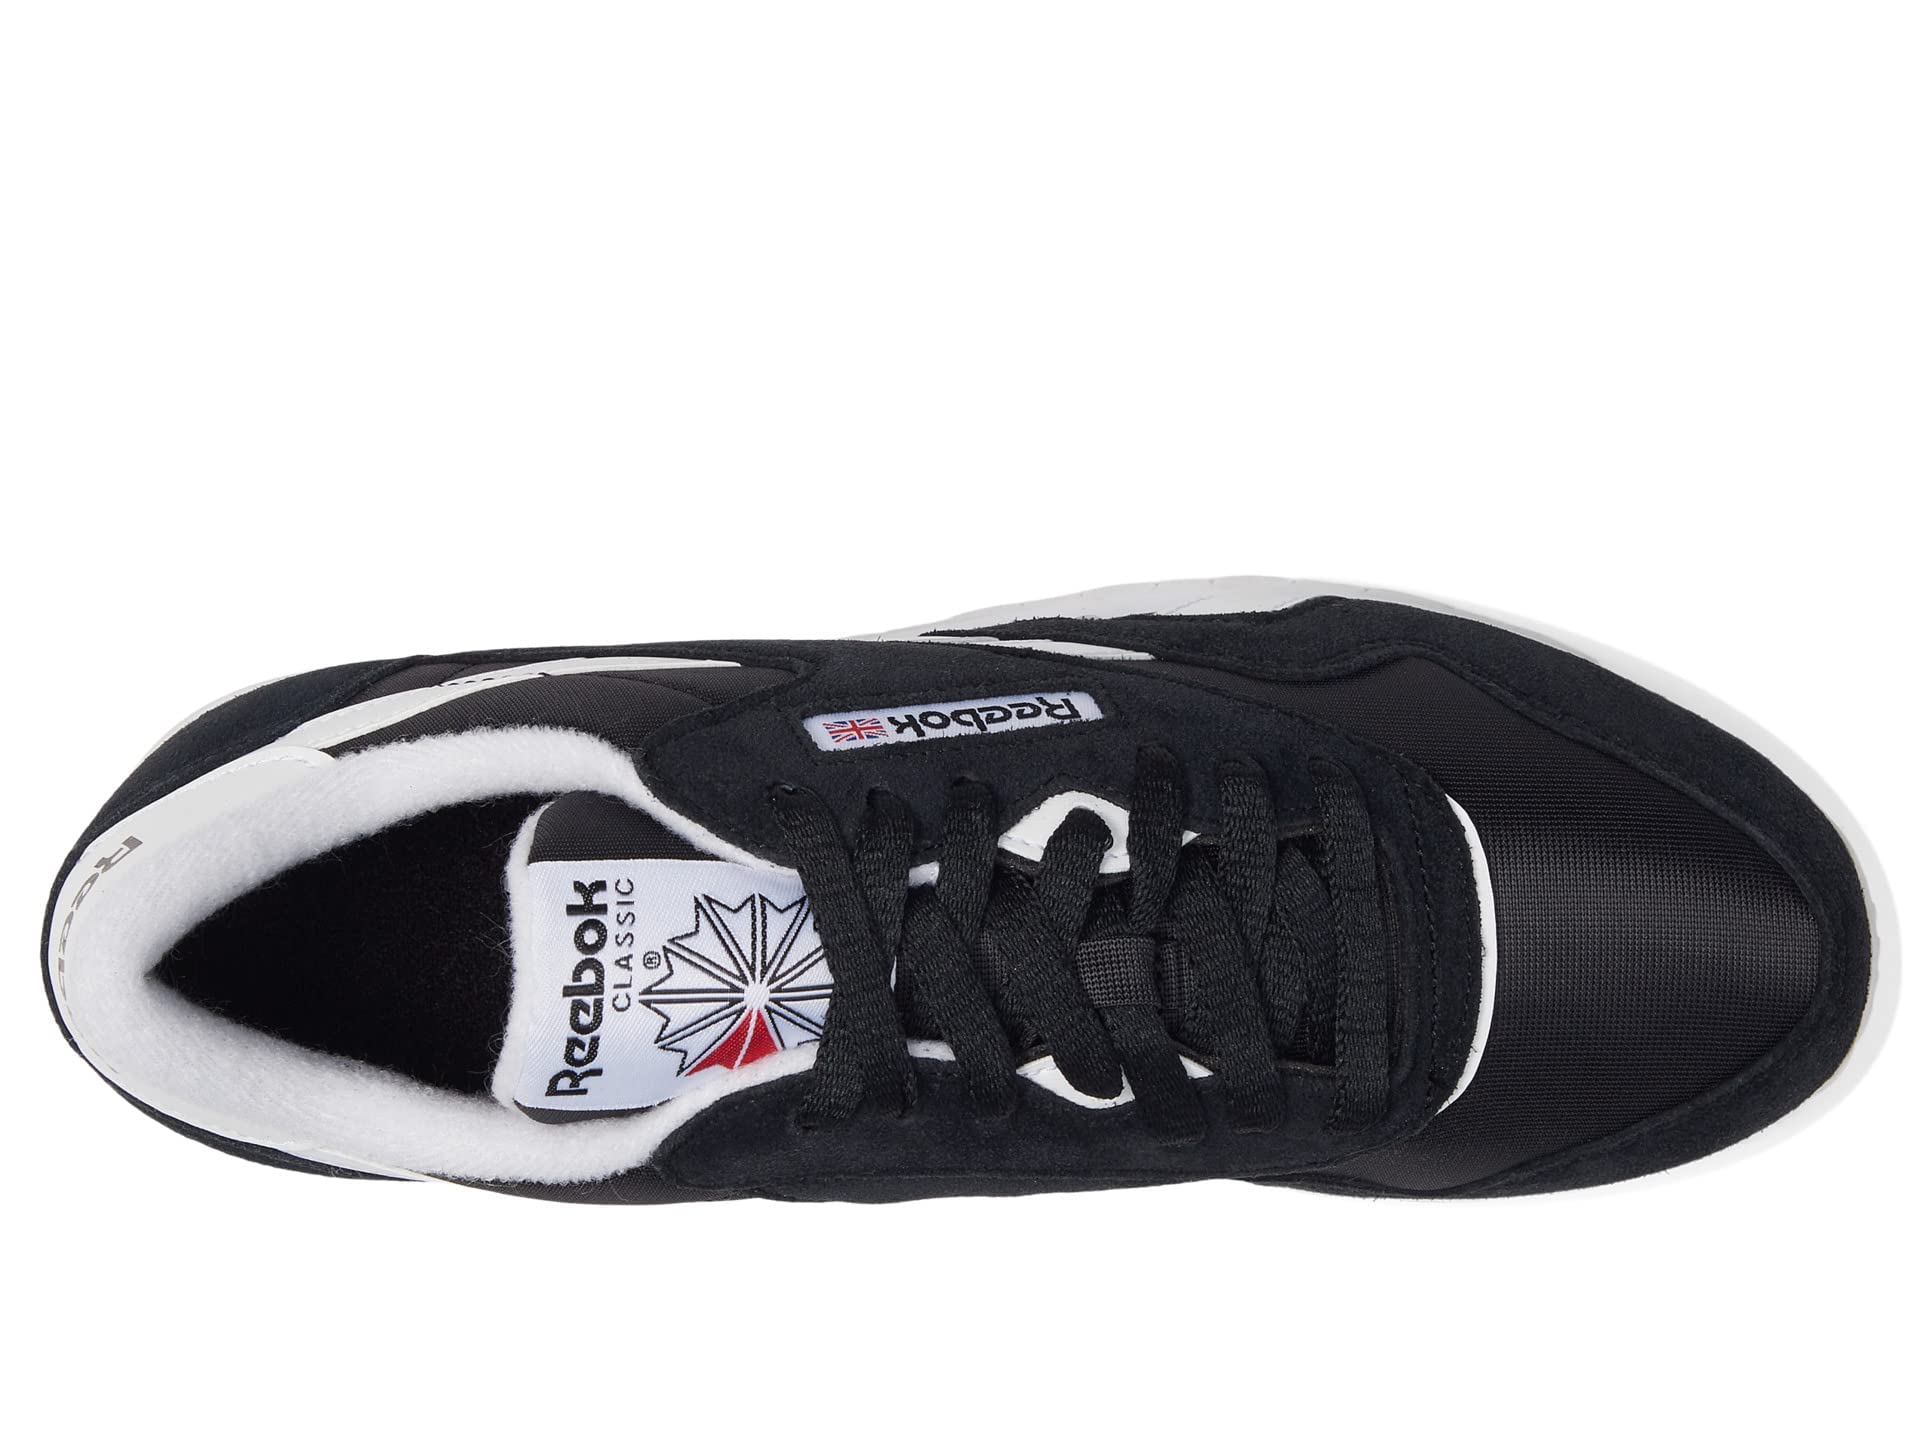 Reebok Women's Classic Nylon Sneaker, Black/White, 8.5